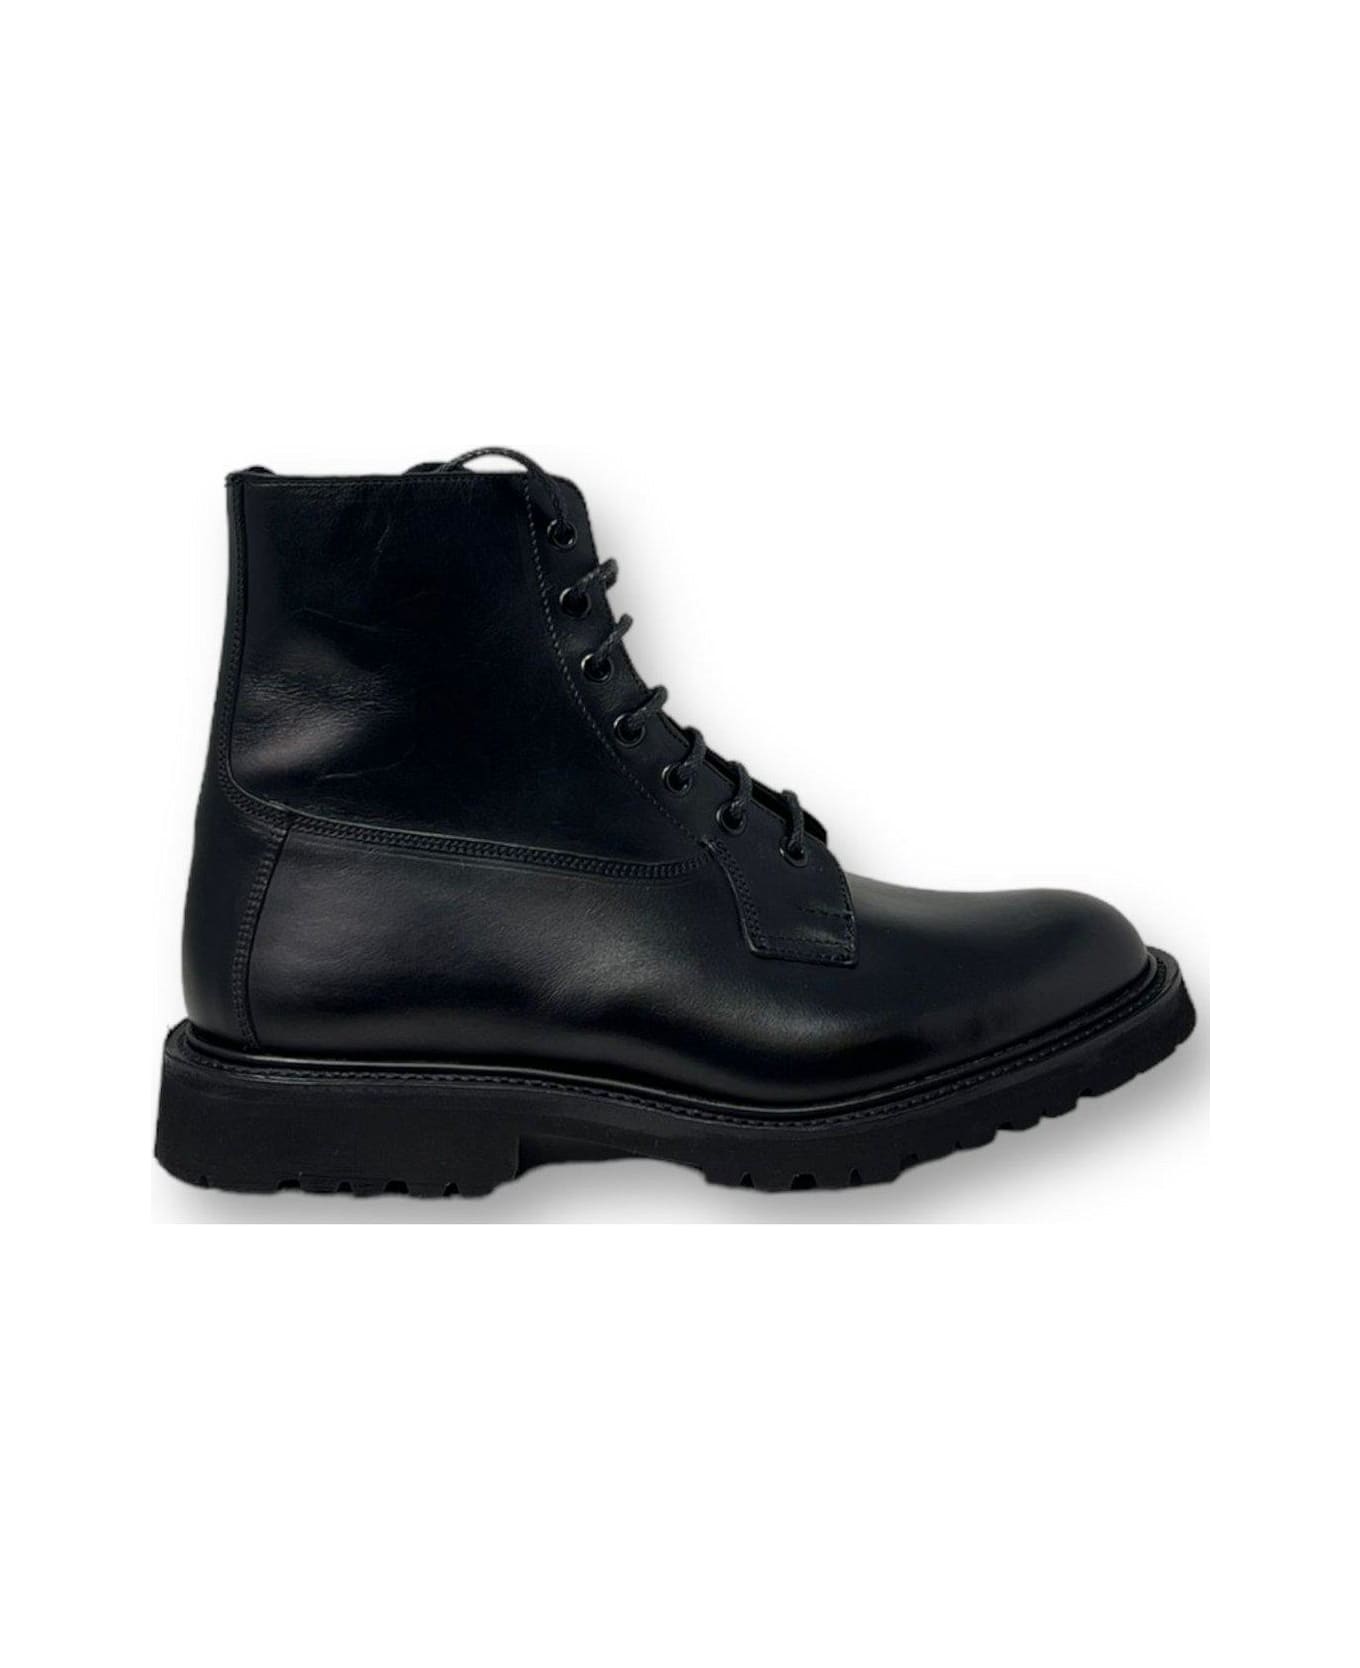 Tricker's Burford Plain Derby Boot Boots - BLACK ブーツ